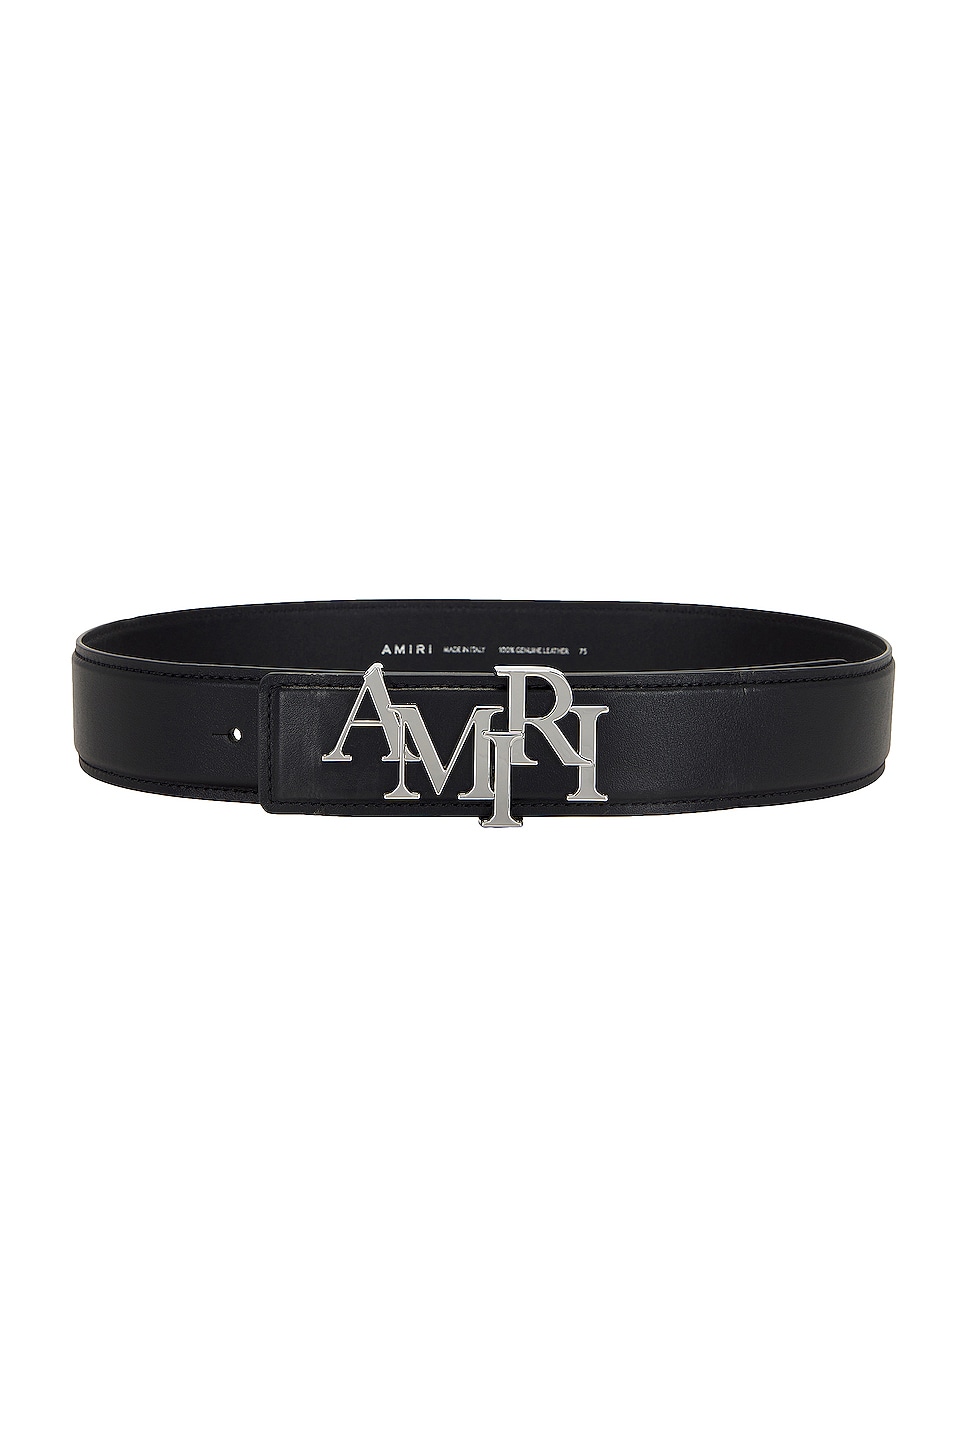 Amiri 4cm Staggered Belt in Black